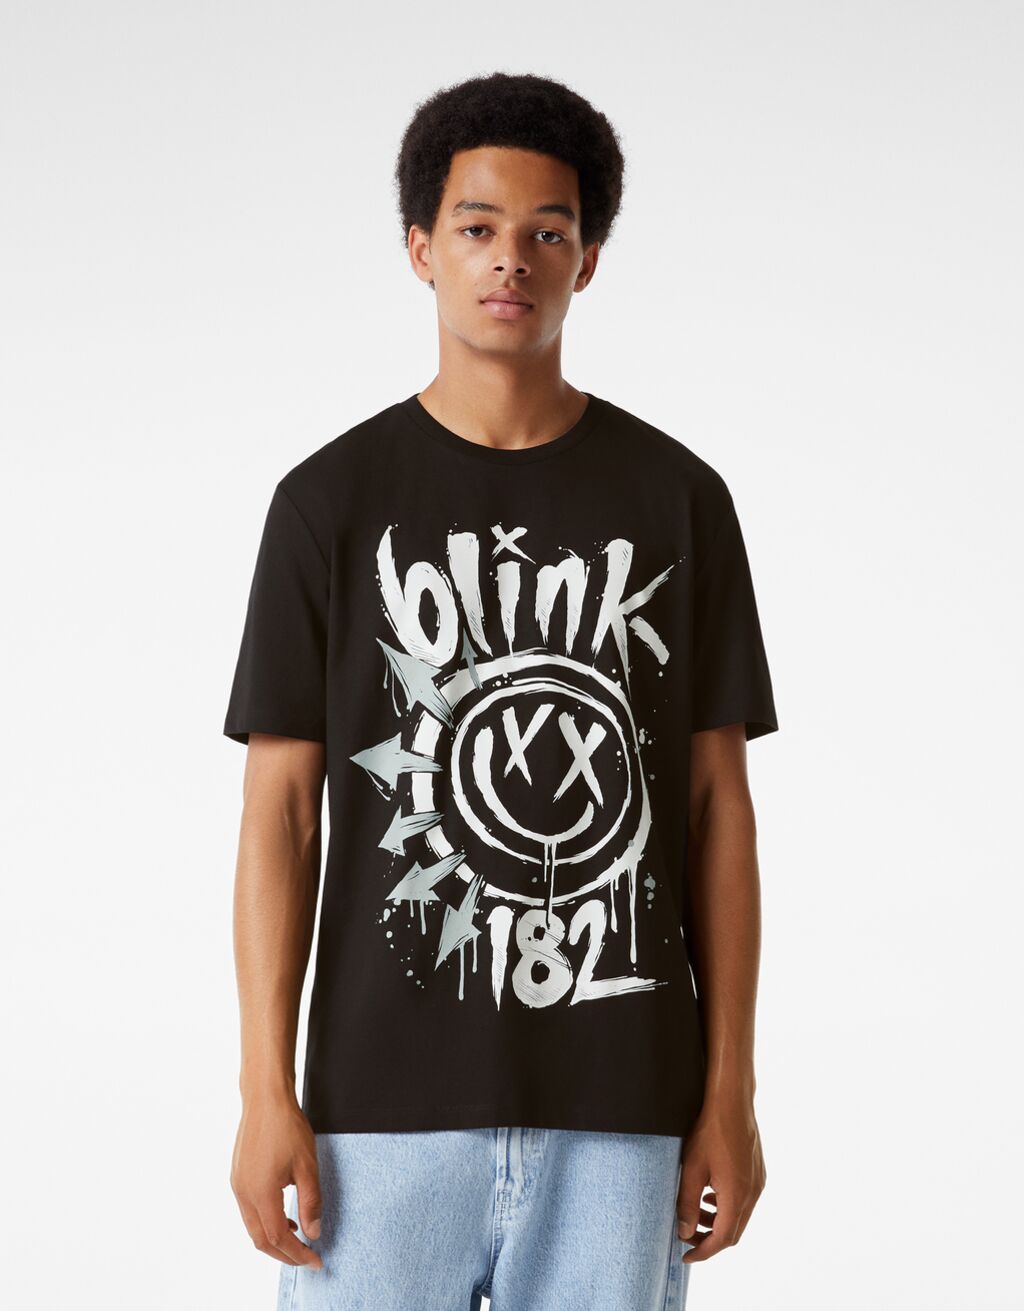 Camiseta manga corta regular fit print Blink 182